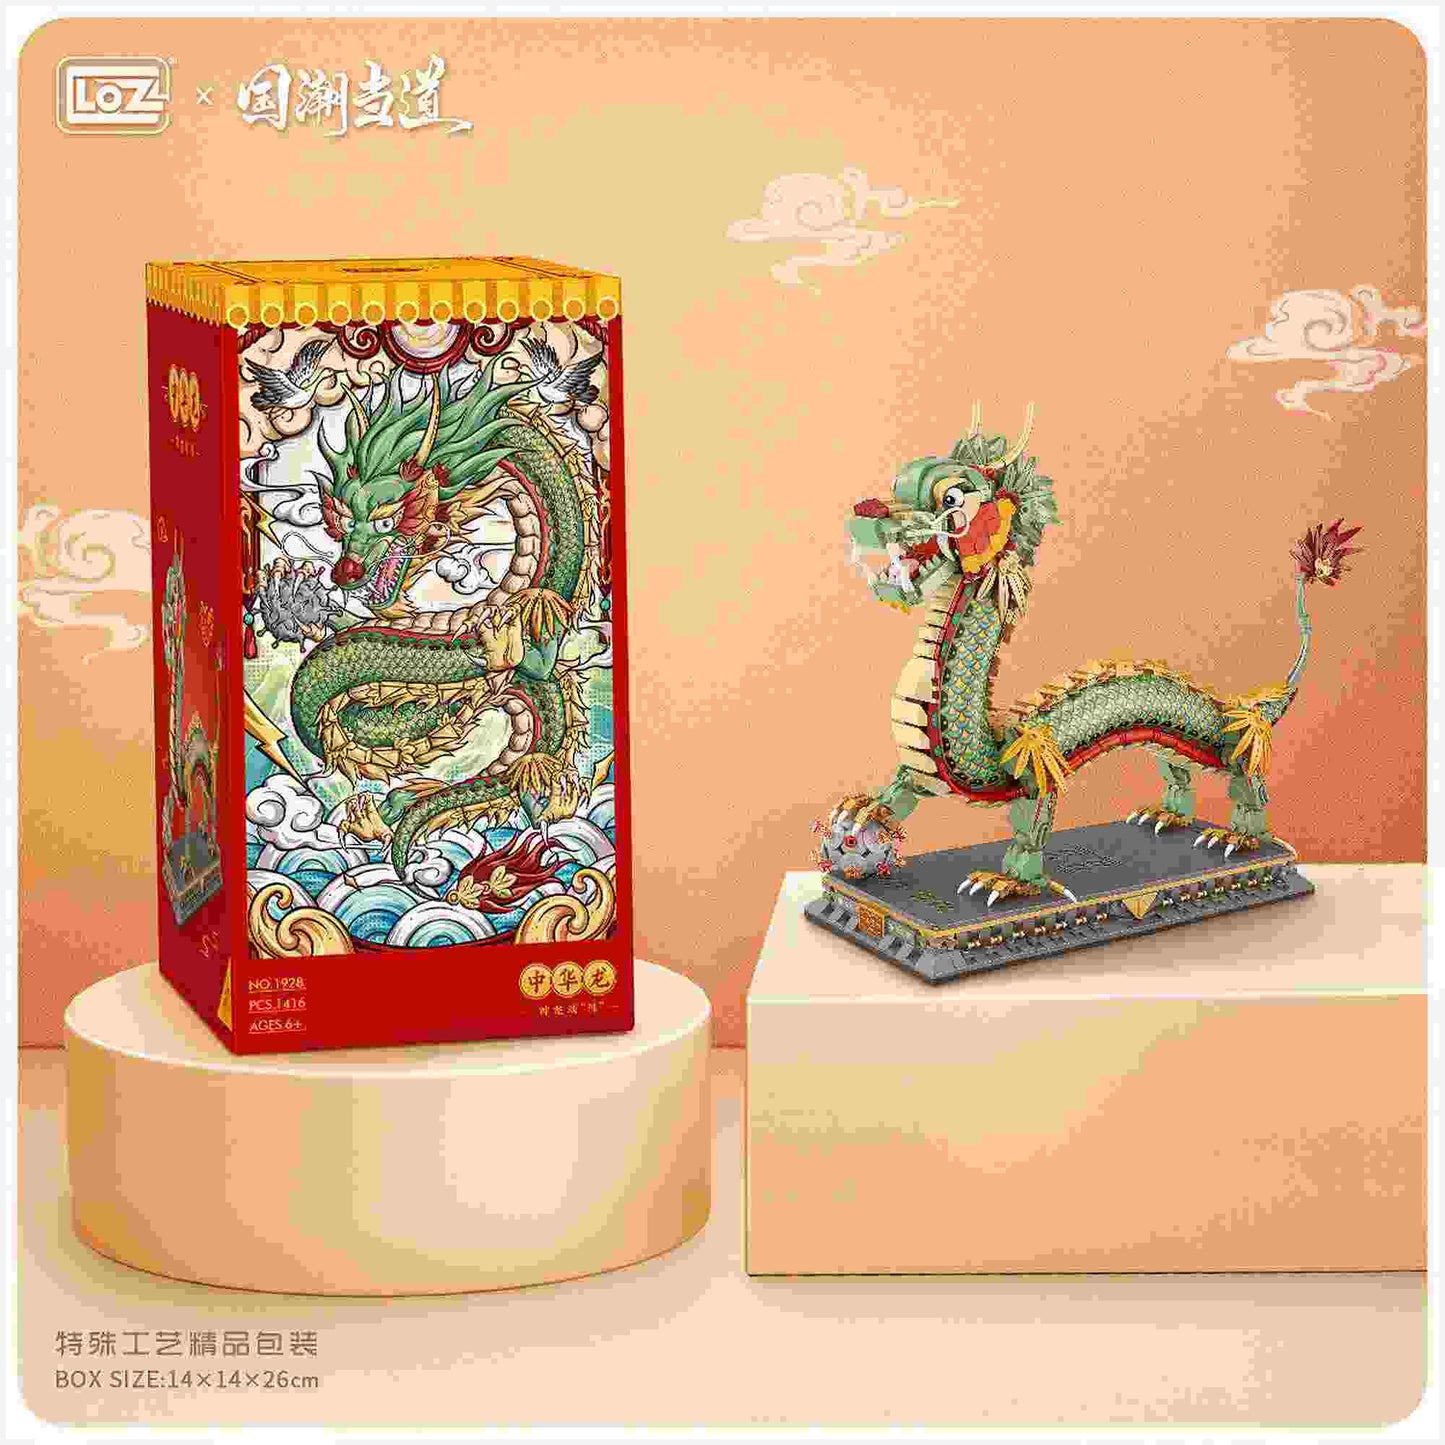 LOZ mini Blocks Kids Building Toys Chinese Dragon (1928) New Year Gift Home Decor